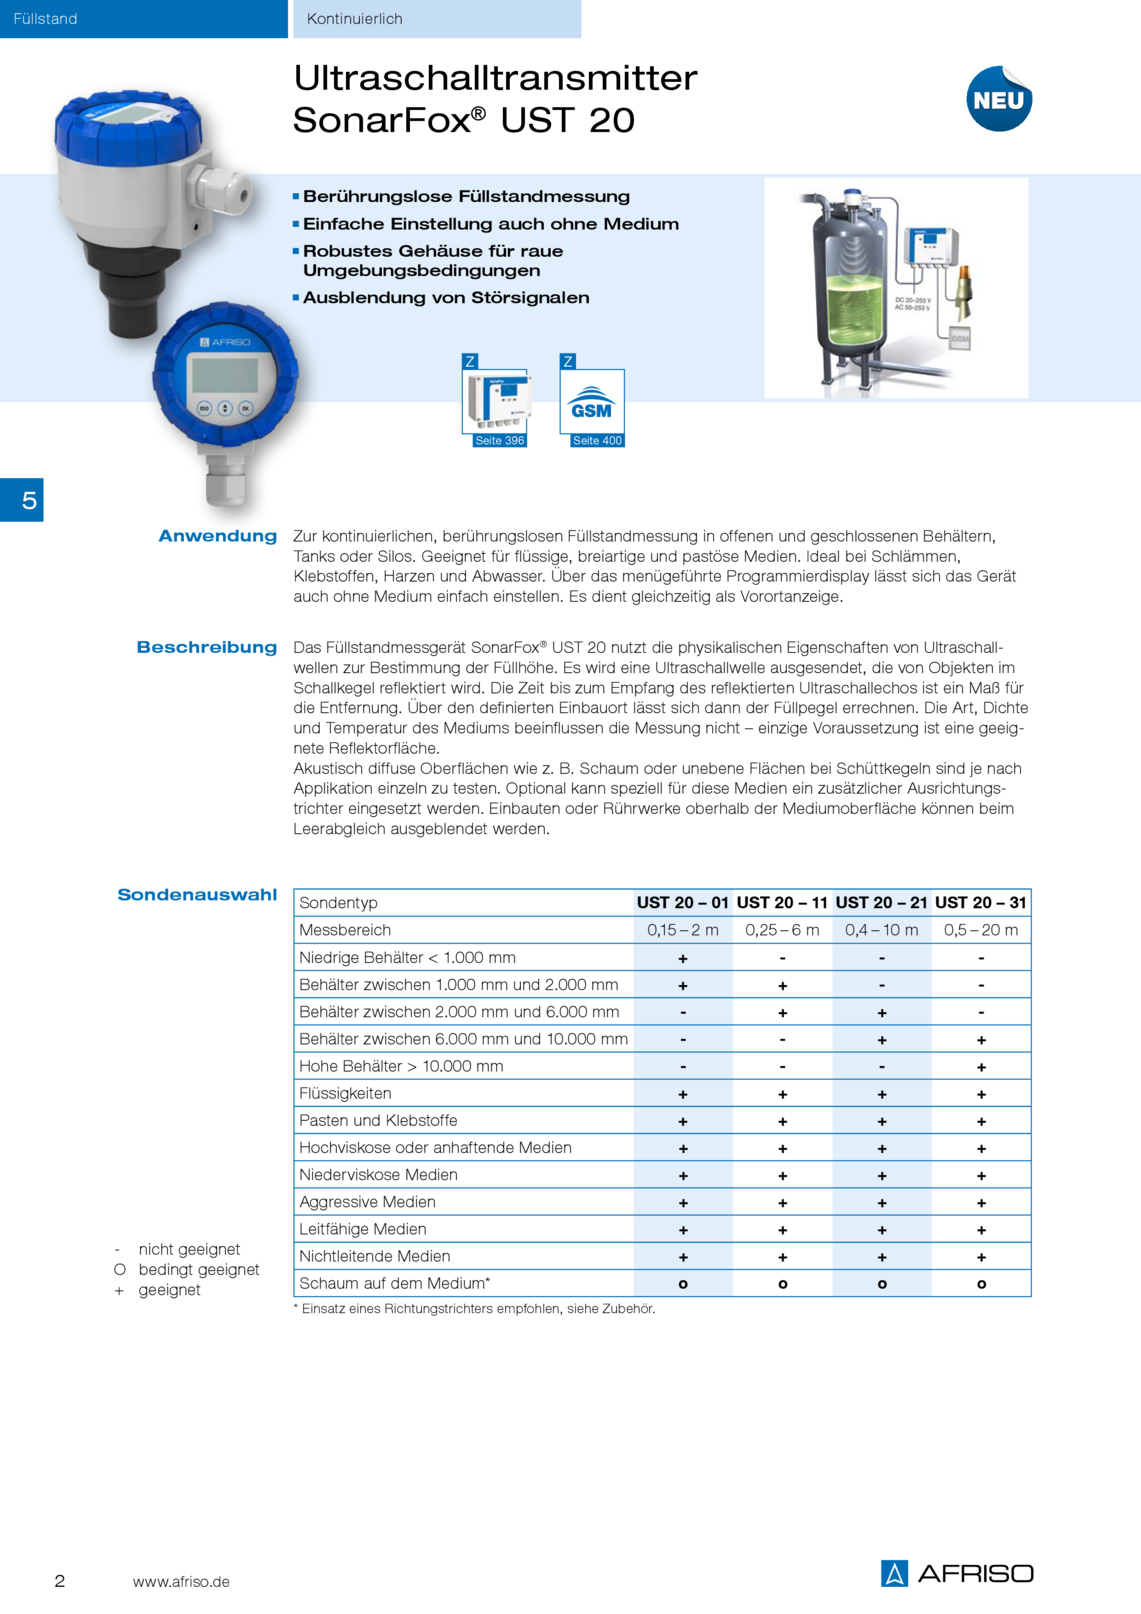 Afriso Ultraschalltransmitter SonarFox®UST 20